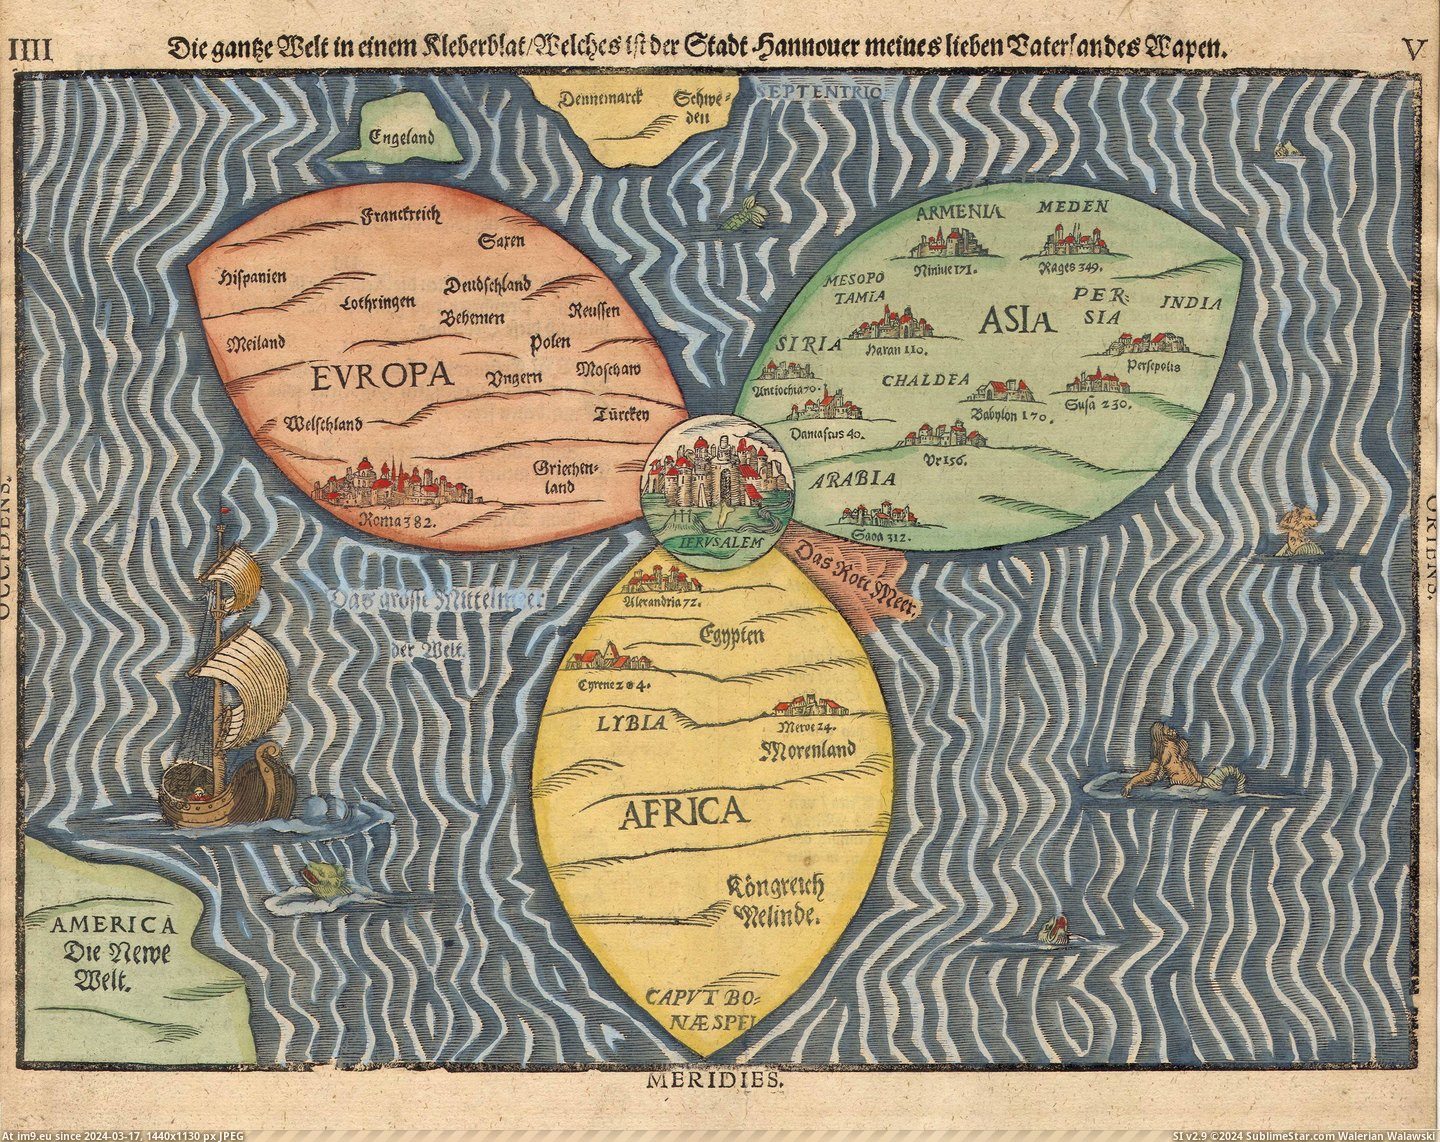 #Map #Leaf #Nting #Clover #Heinrich [Mapporn] Heinrich Bünting, Clover leaf map (1581) [4441x3496] Pic. (Image of album My r/MAPS favs))